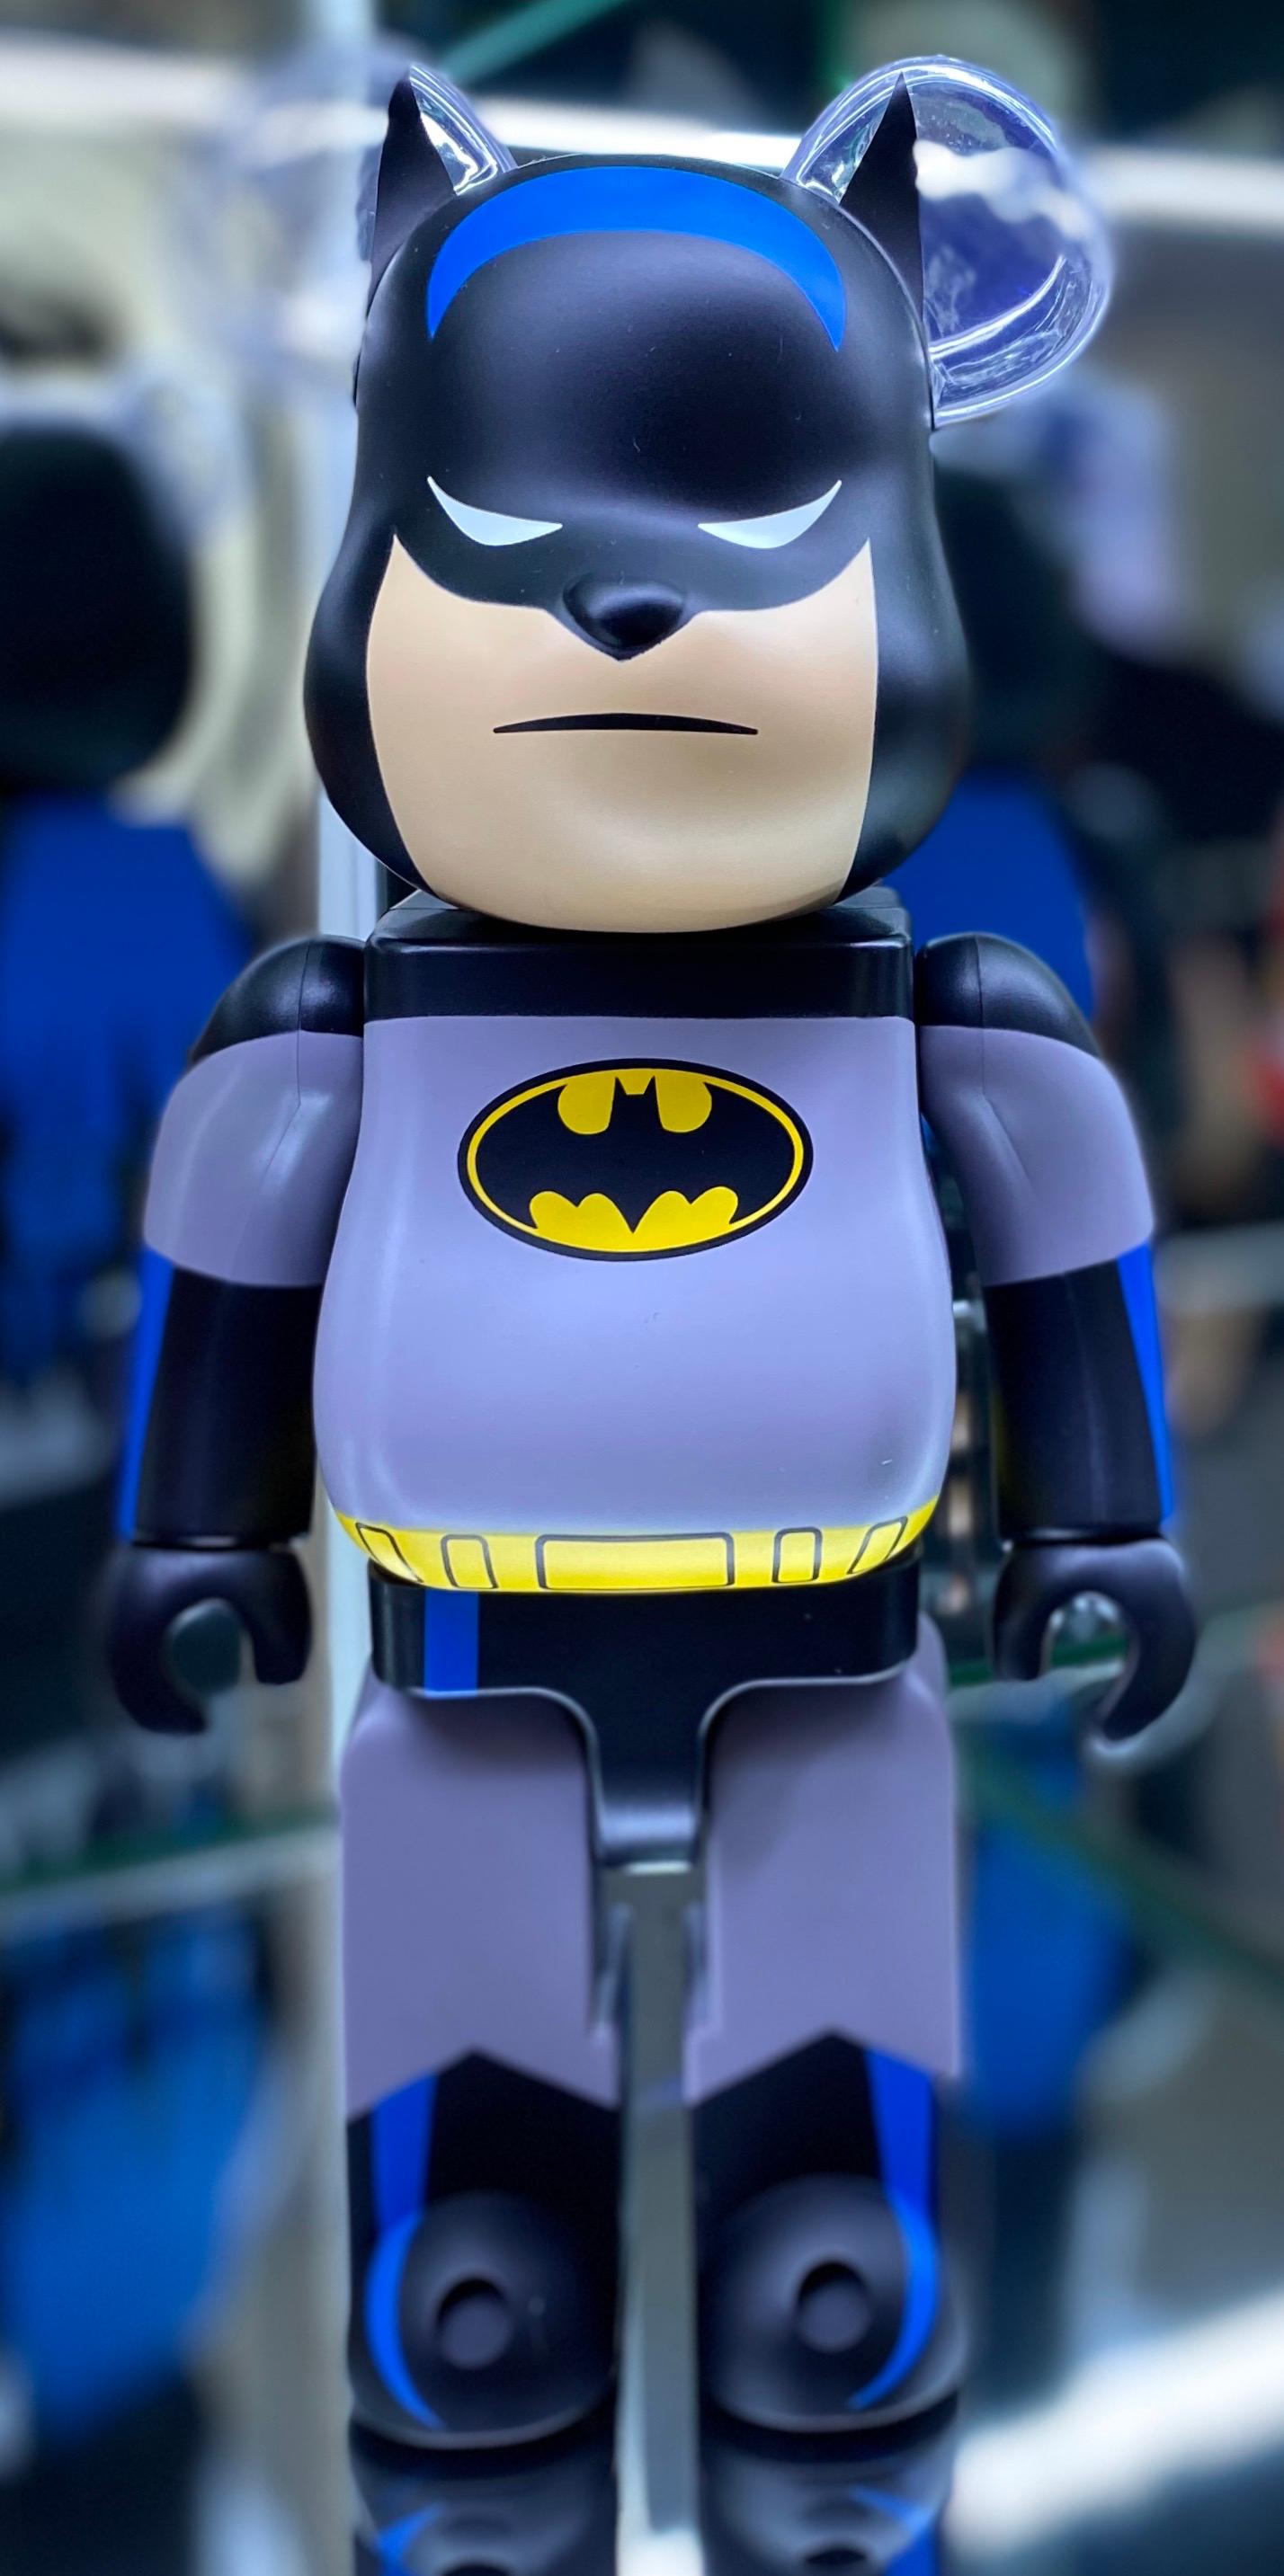 Medicom 2019 Be@rbrick DC Batman The Animated Series 400% 100% Bearbrick set 